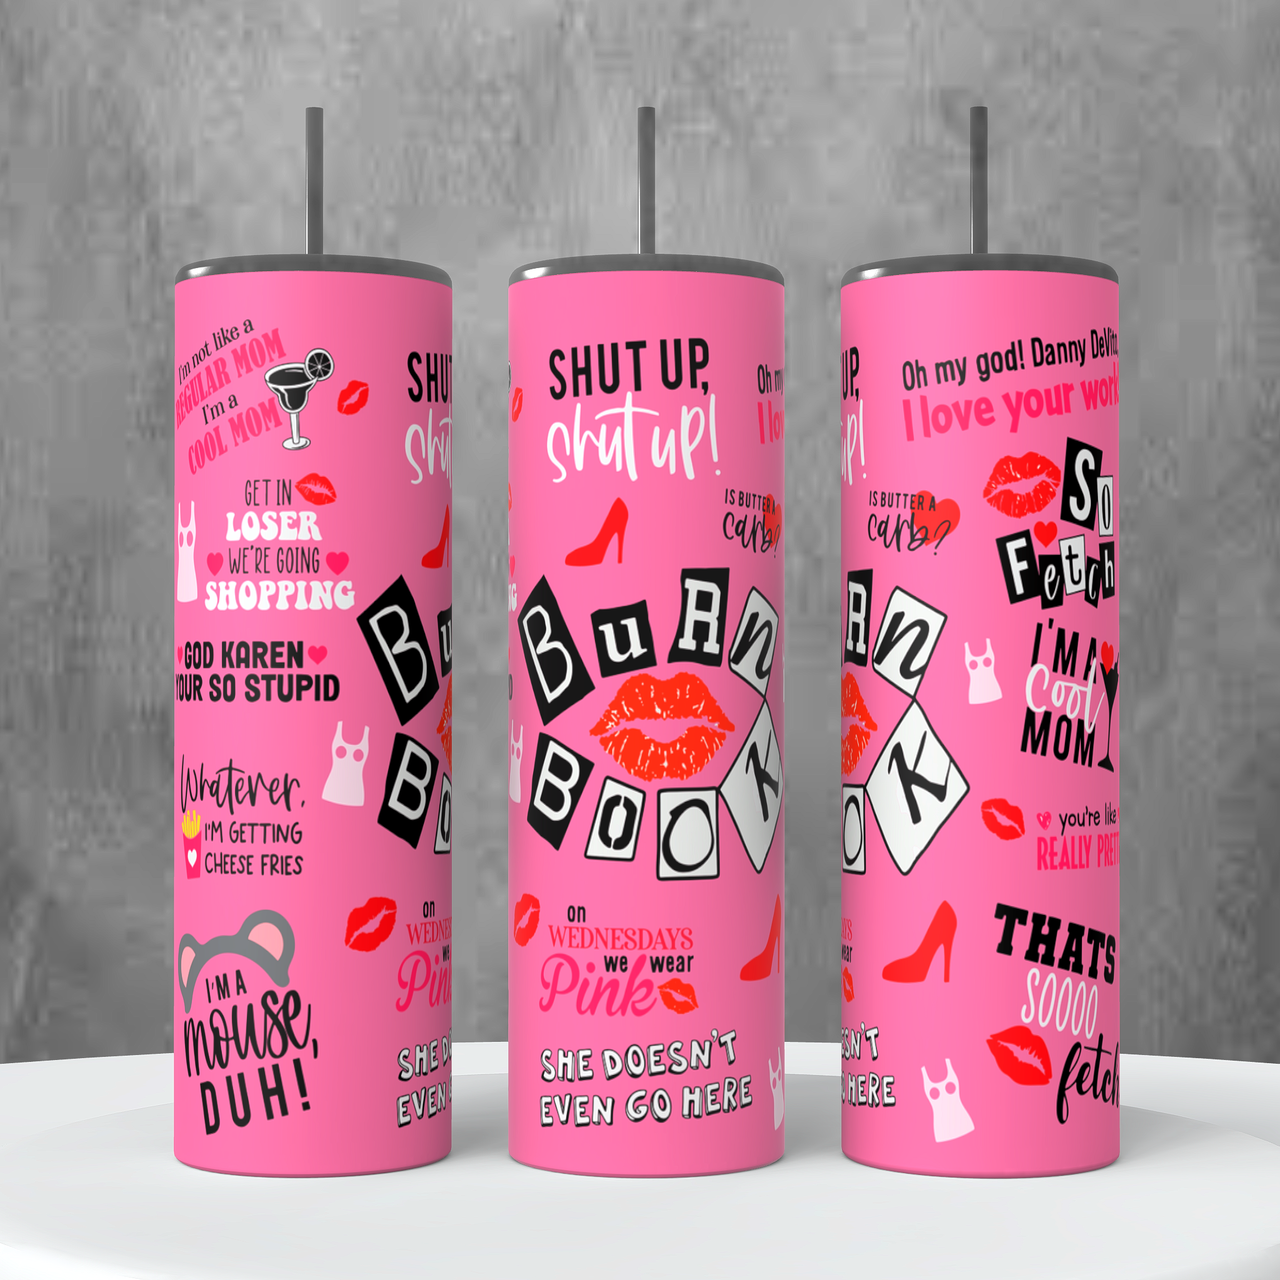 Mean Girls inspired Burn Book pink tumbler